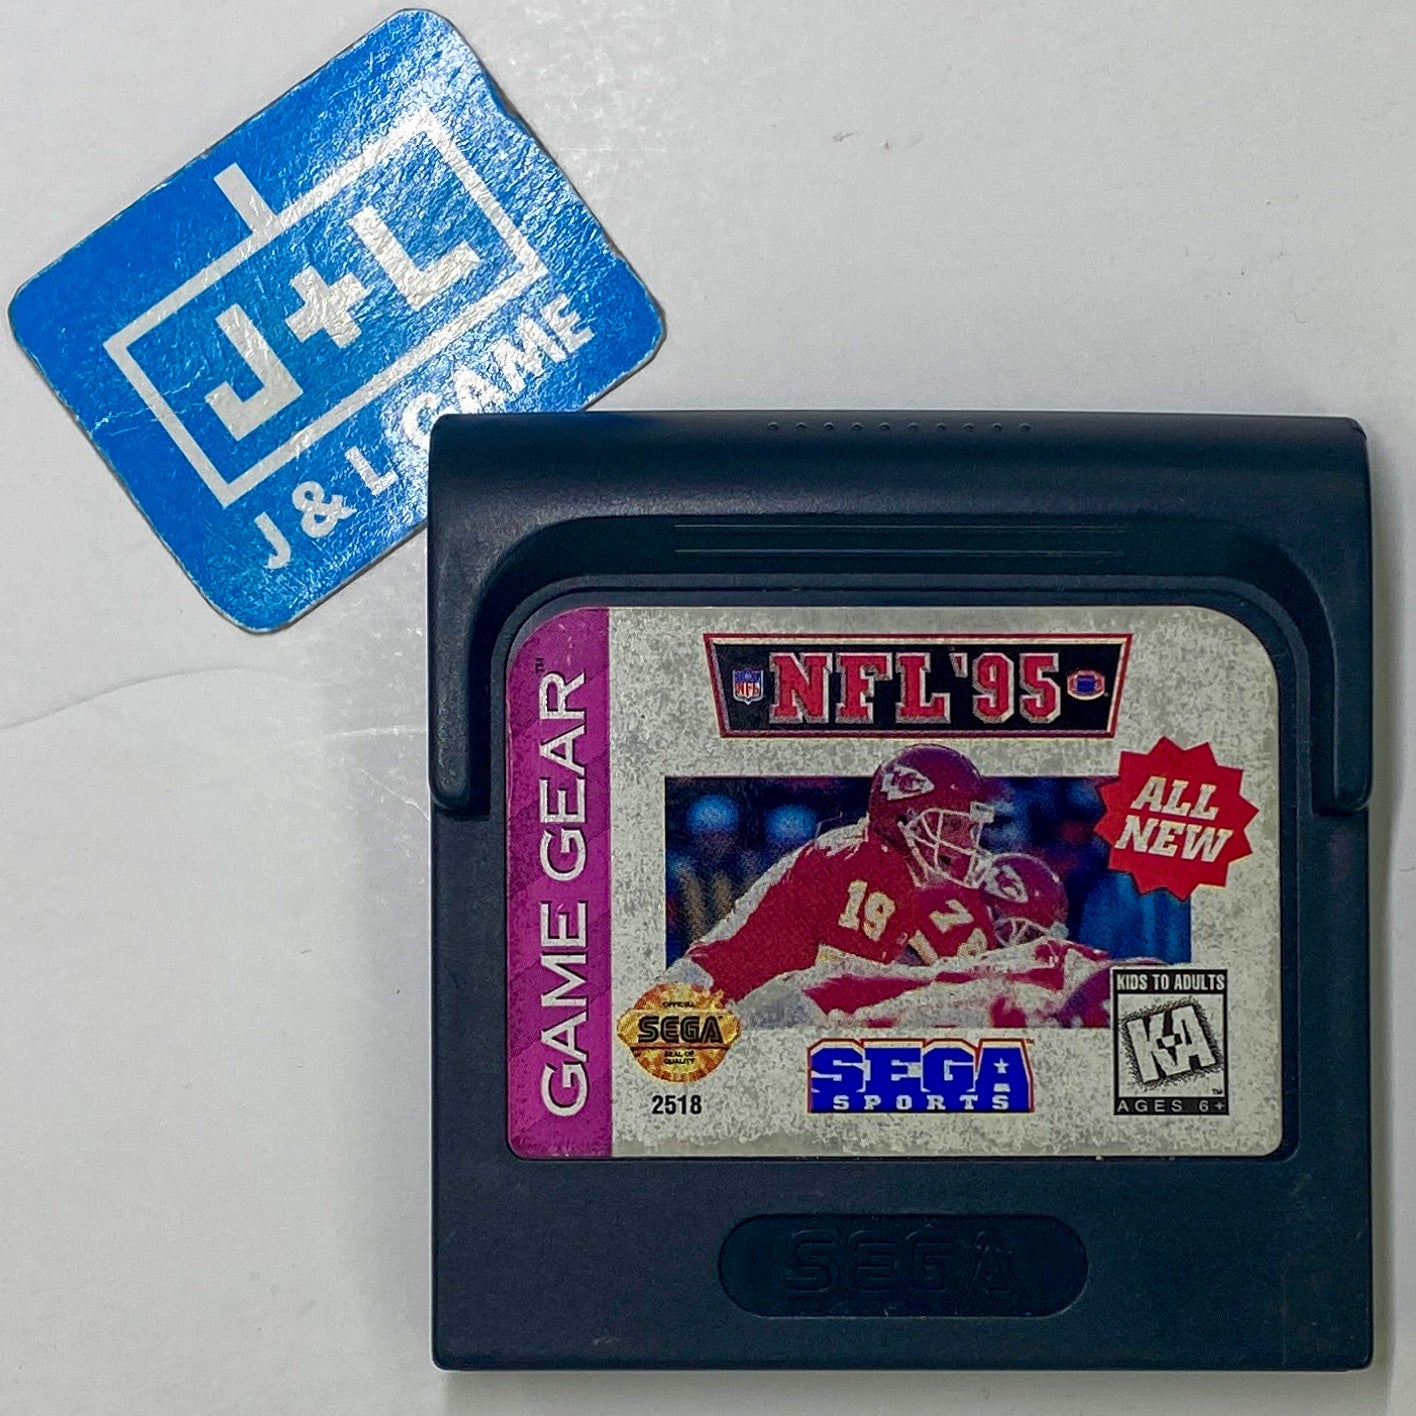 NFL '95 - SEGA GameGear [Pre-Owned] Video Games Sega   